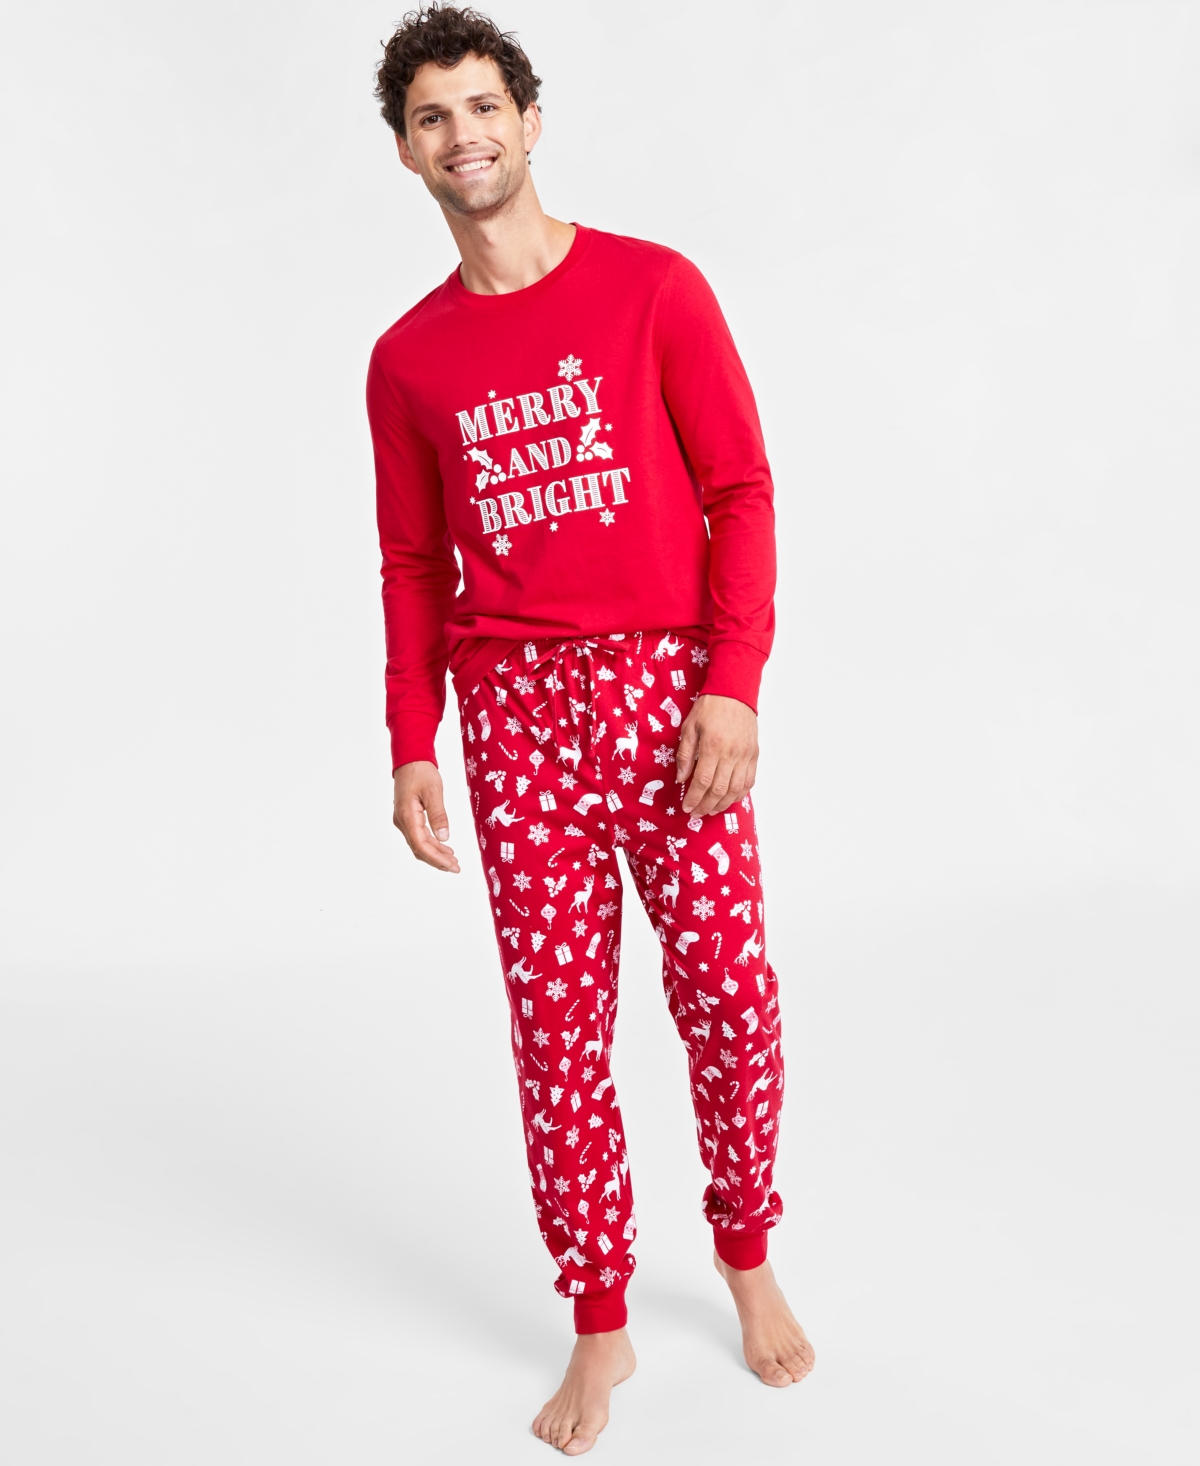 Matching Family Pajamas Men's Mix It Merry & Bright Pajamas Set, Created for Macy's - Merry